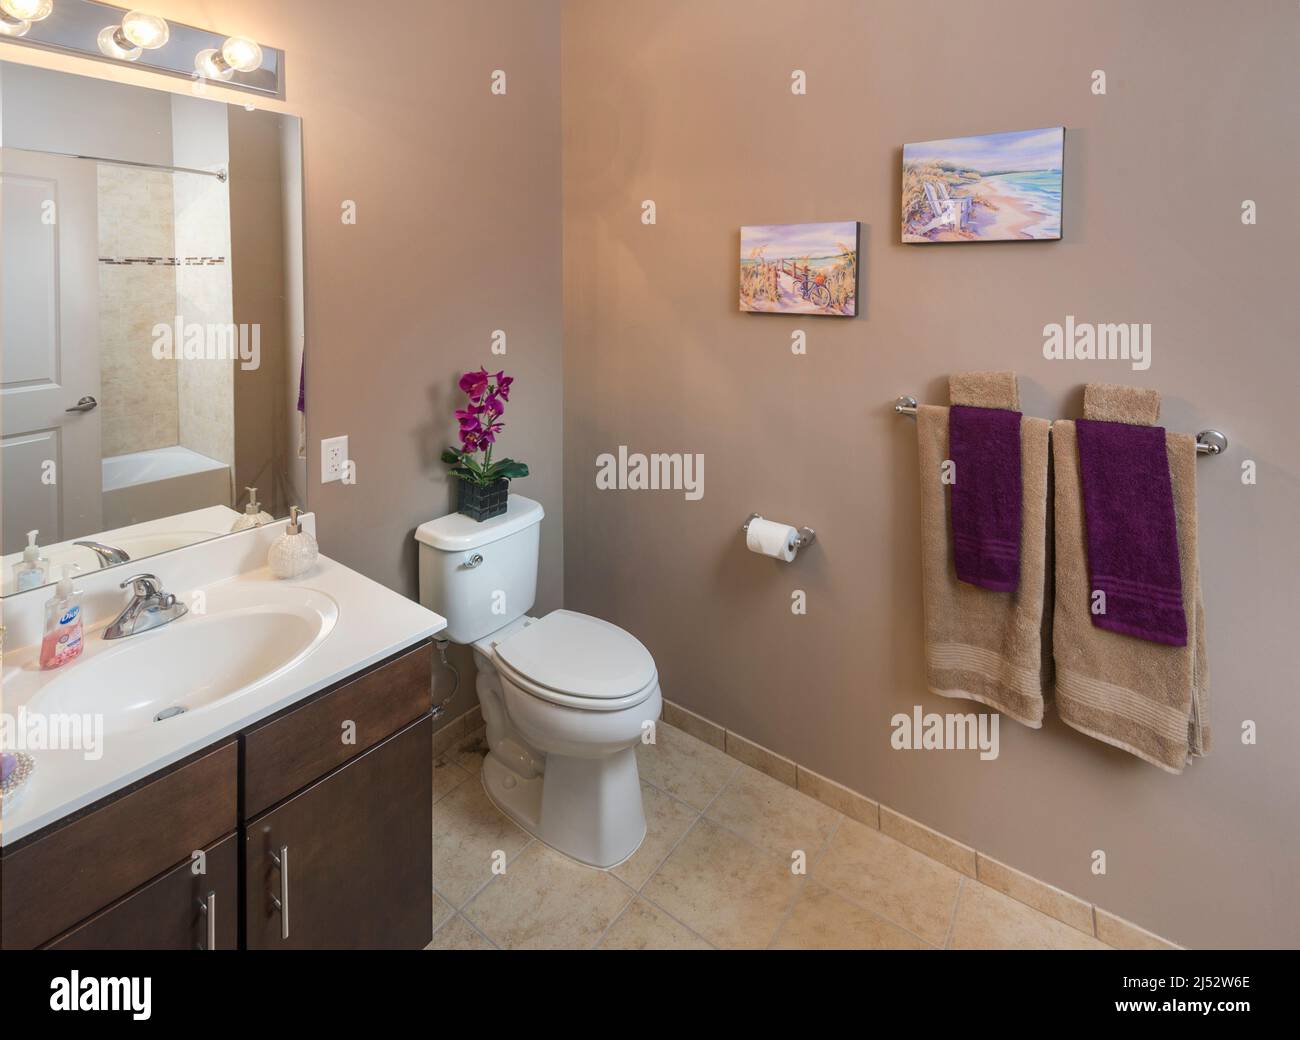 American bathroom interior Stock Photo